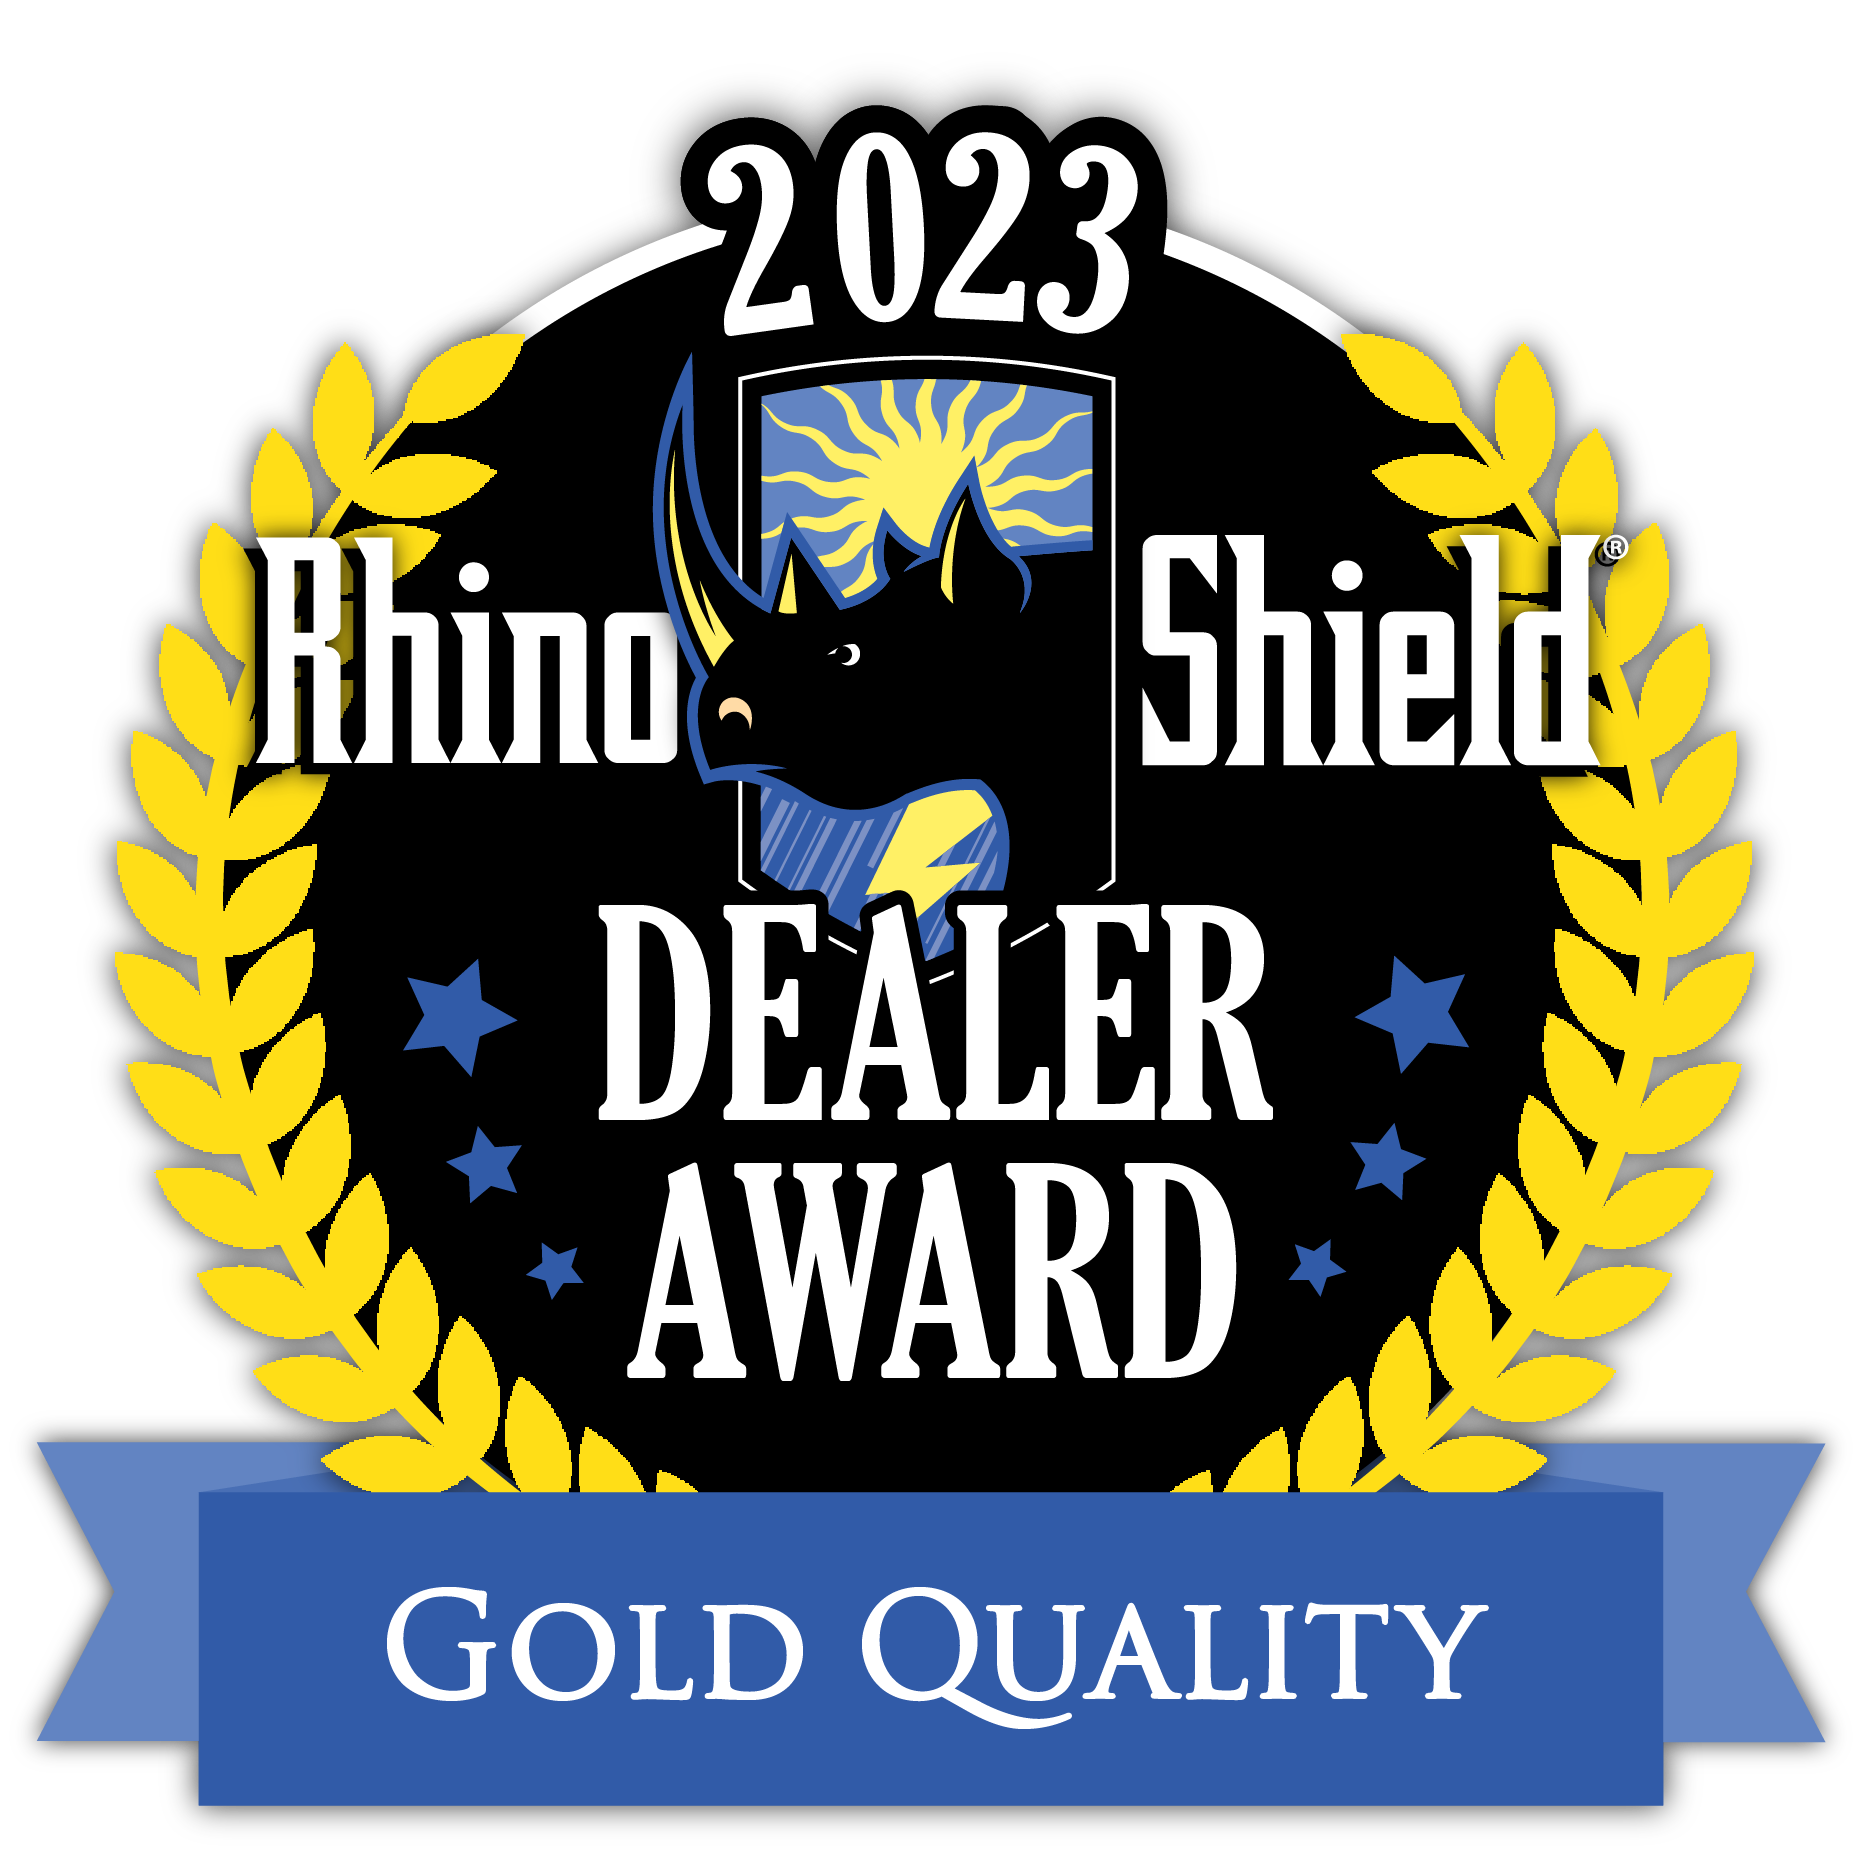 Gold Quality Award 2023